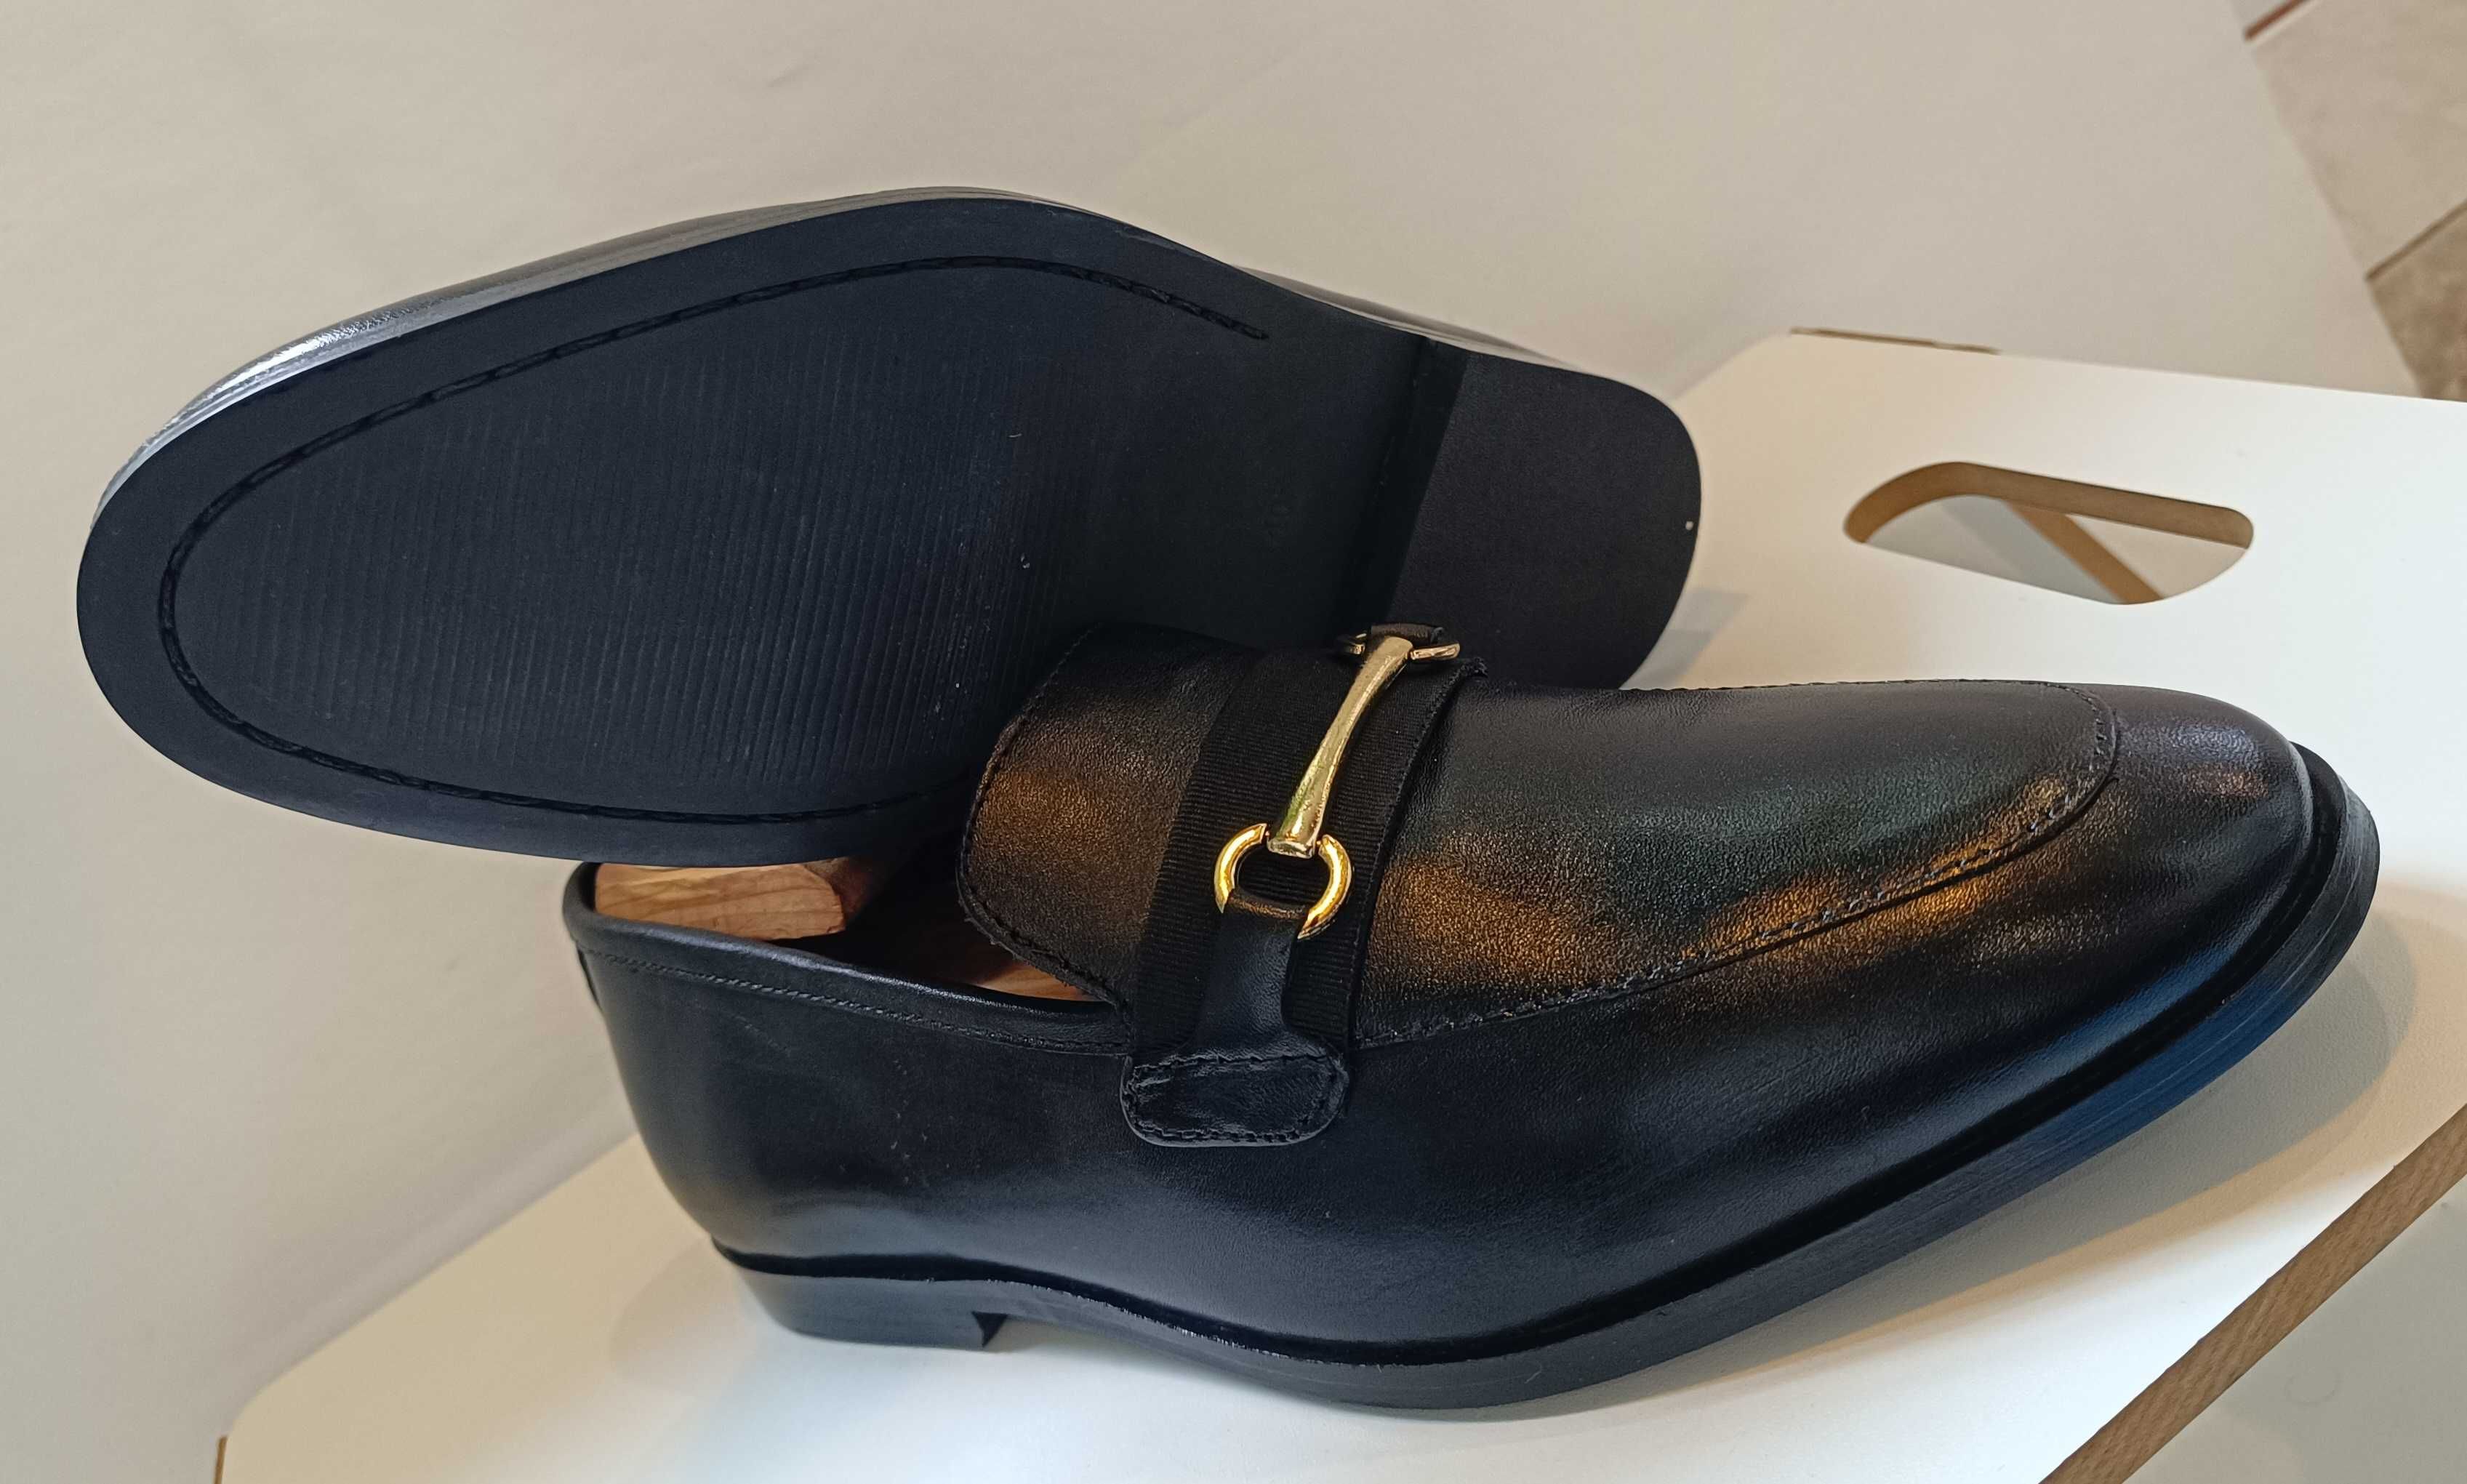 Pantofi loafer 40 bit premium ZIGN London NOI piele naturala moale